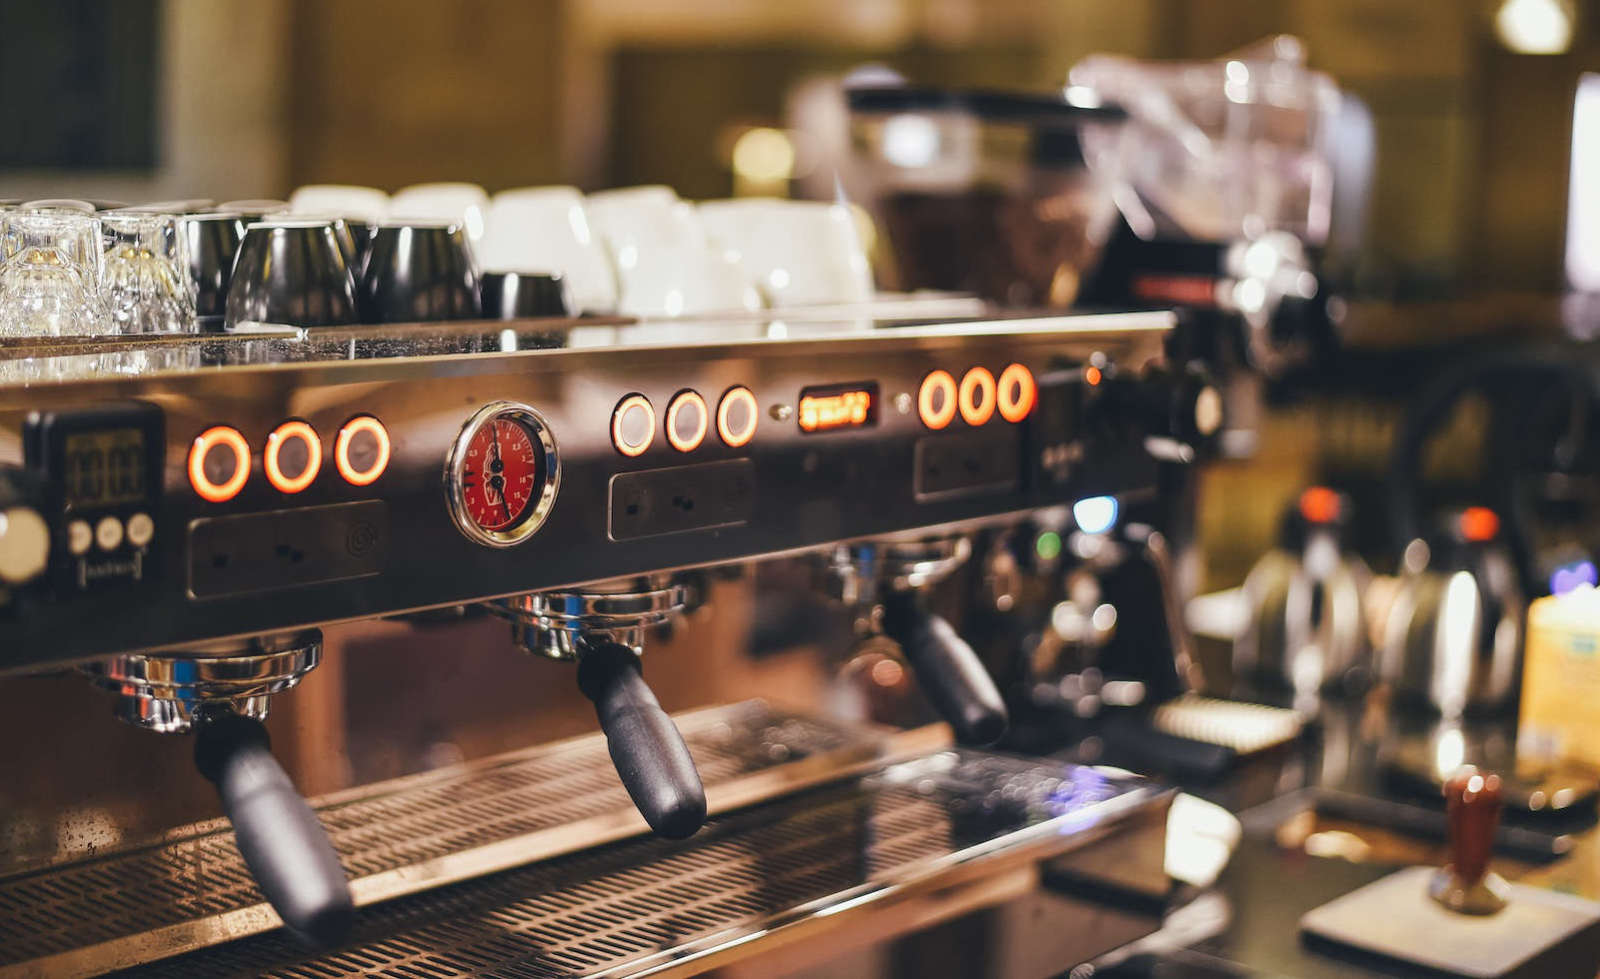 Used espresso machine